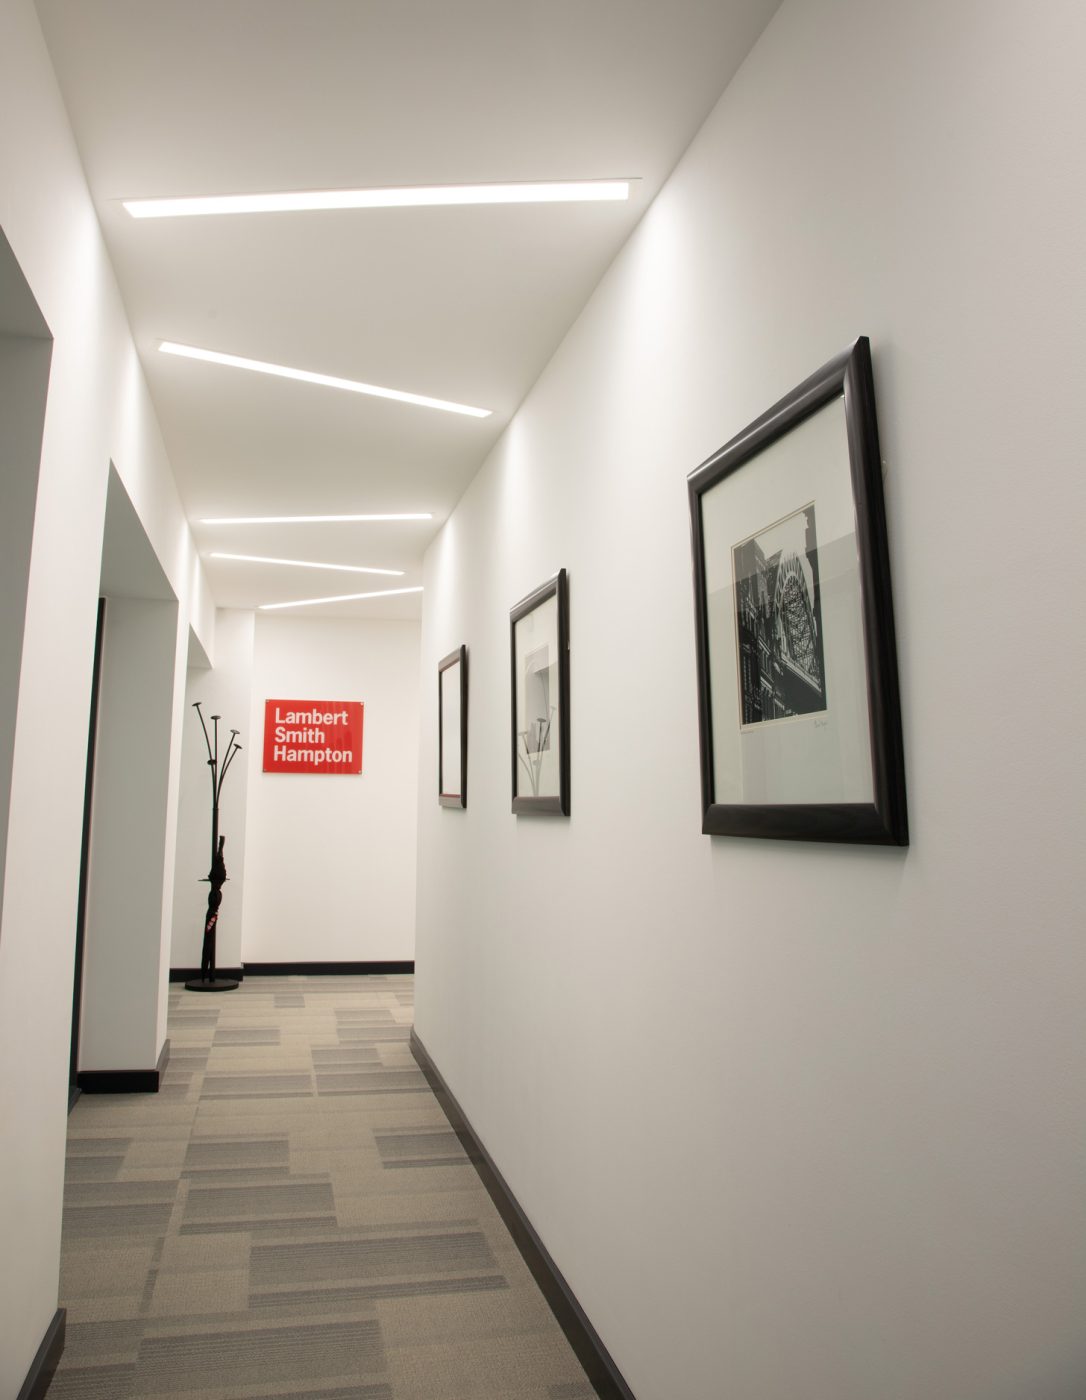 Lambert Smith Hampton offices with Infinitas Micro Direct Recessed Luminaires.